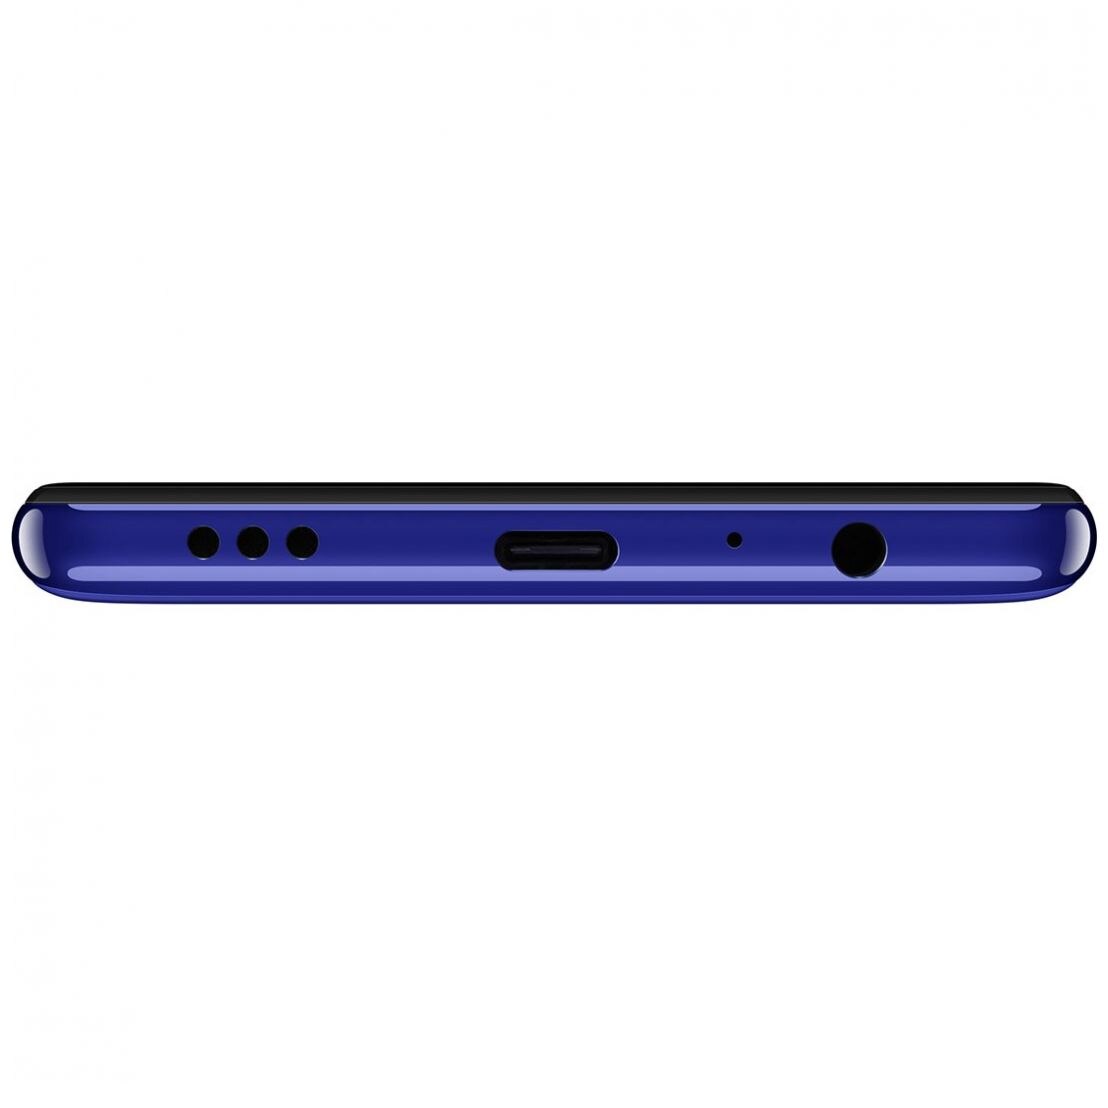 Celular LG K52 K520Hm Color Azul R9 (Telcel)